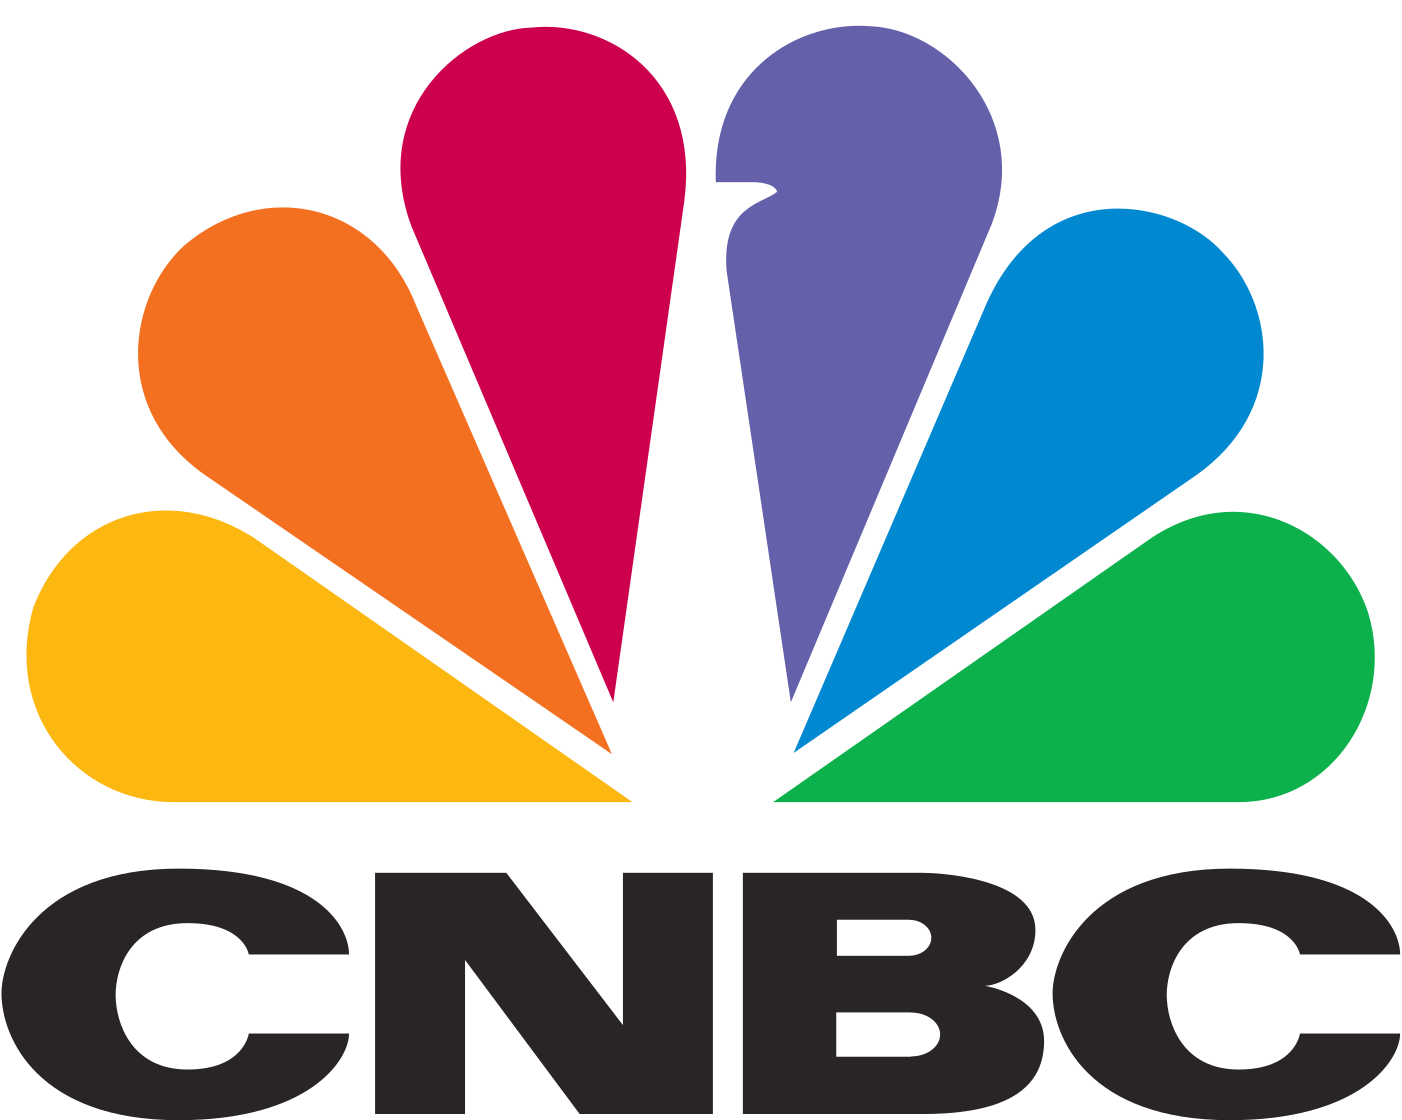 1402px-CNBC_logo.svg